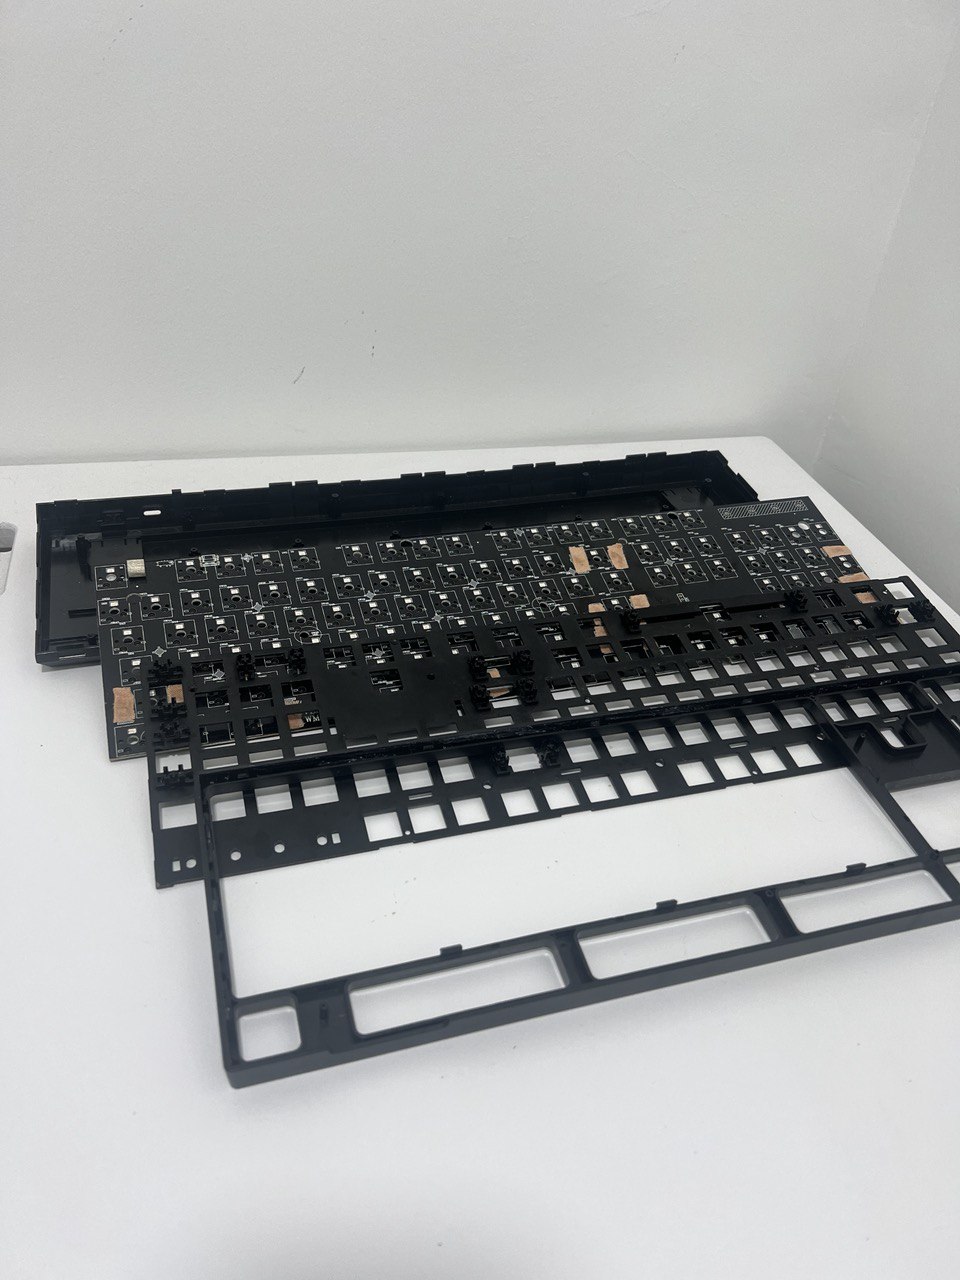 Keyboard components dismantled